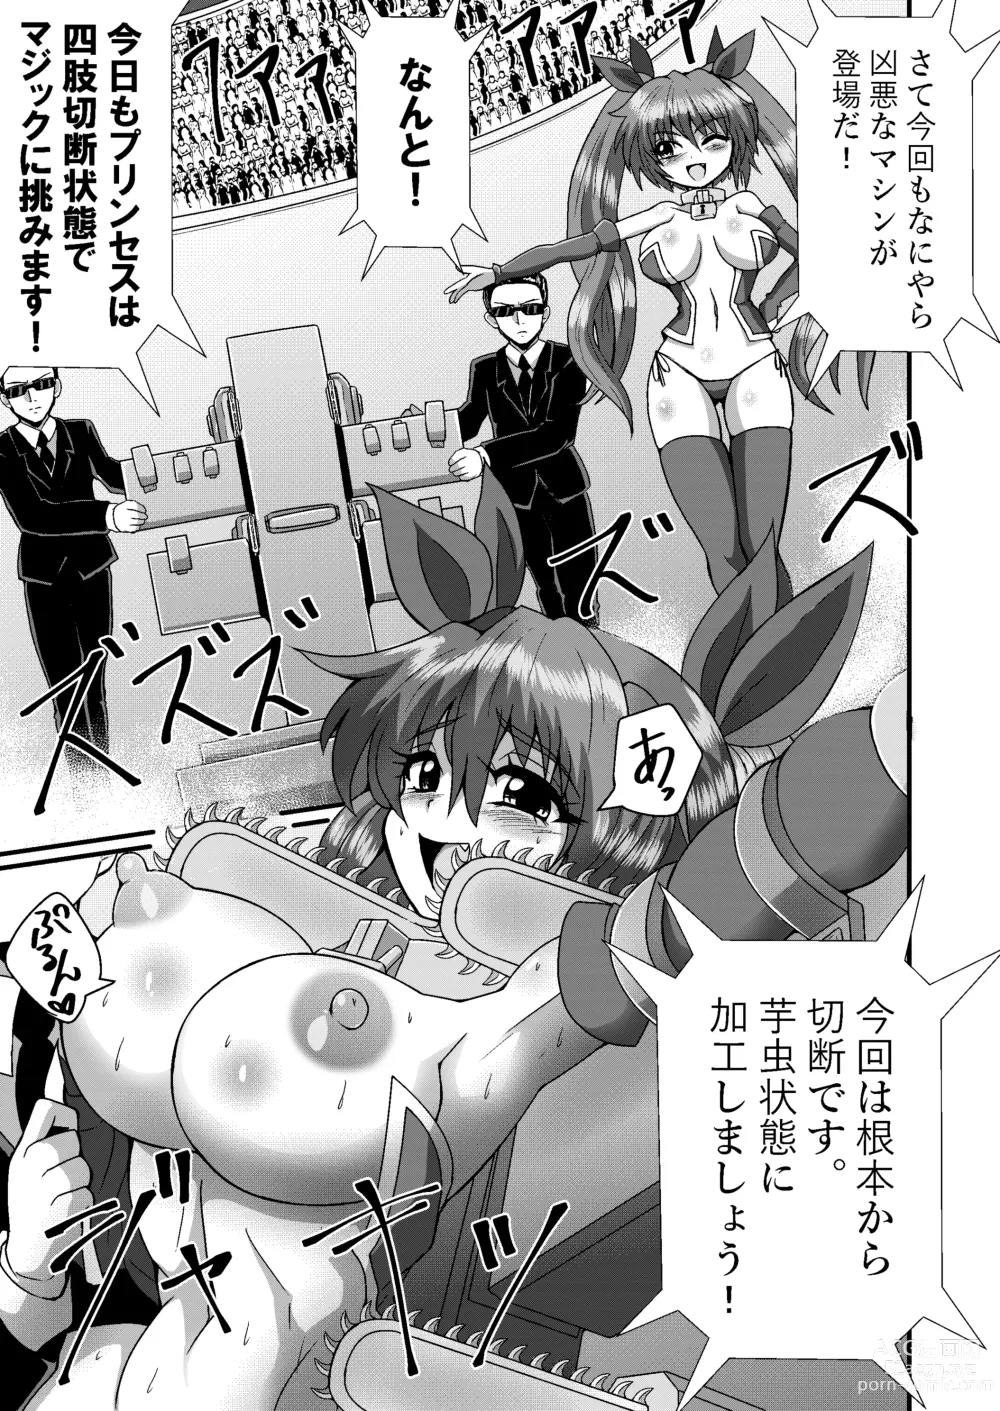 Page 5 of doujinshi 完全拘束脱出マジック!串刺しにされて生還できるのか!?